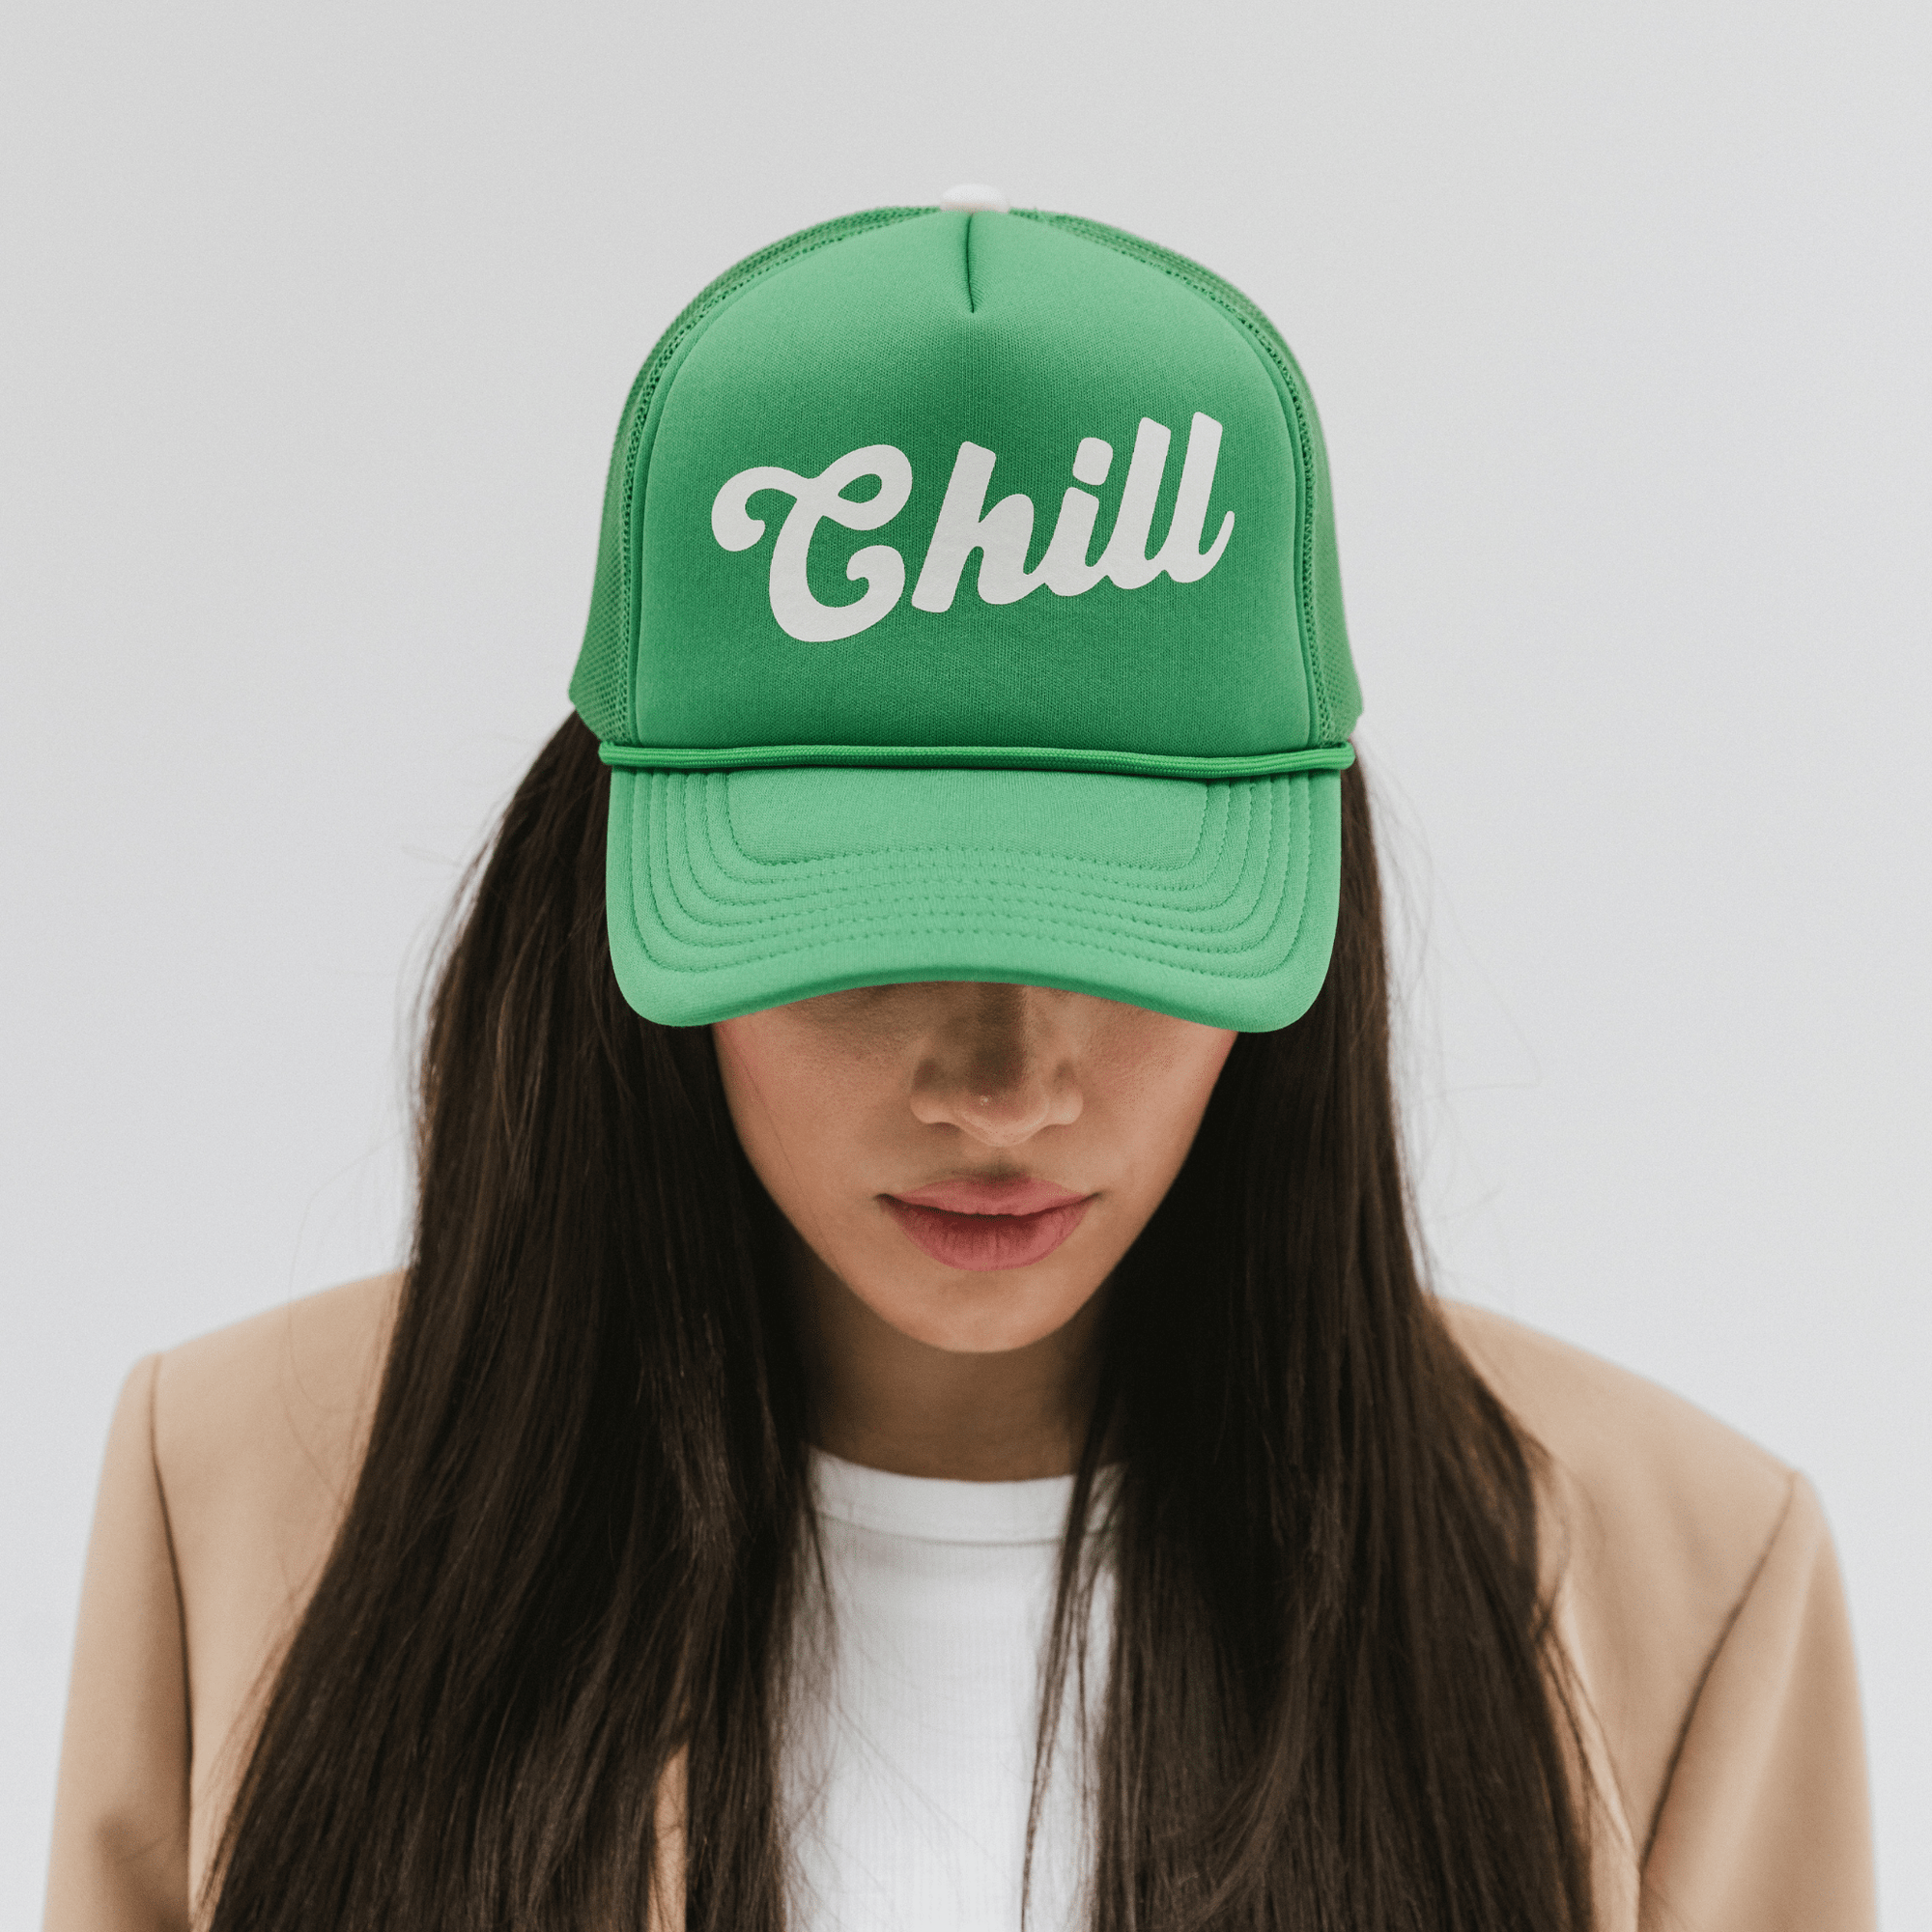 Gigi Pip trucker hats for women - Chill Foam Trucker Hat - 100% polyester foam + mesh trucker hat with a curved brim featuring the word 